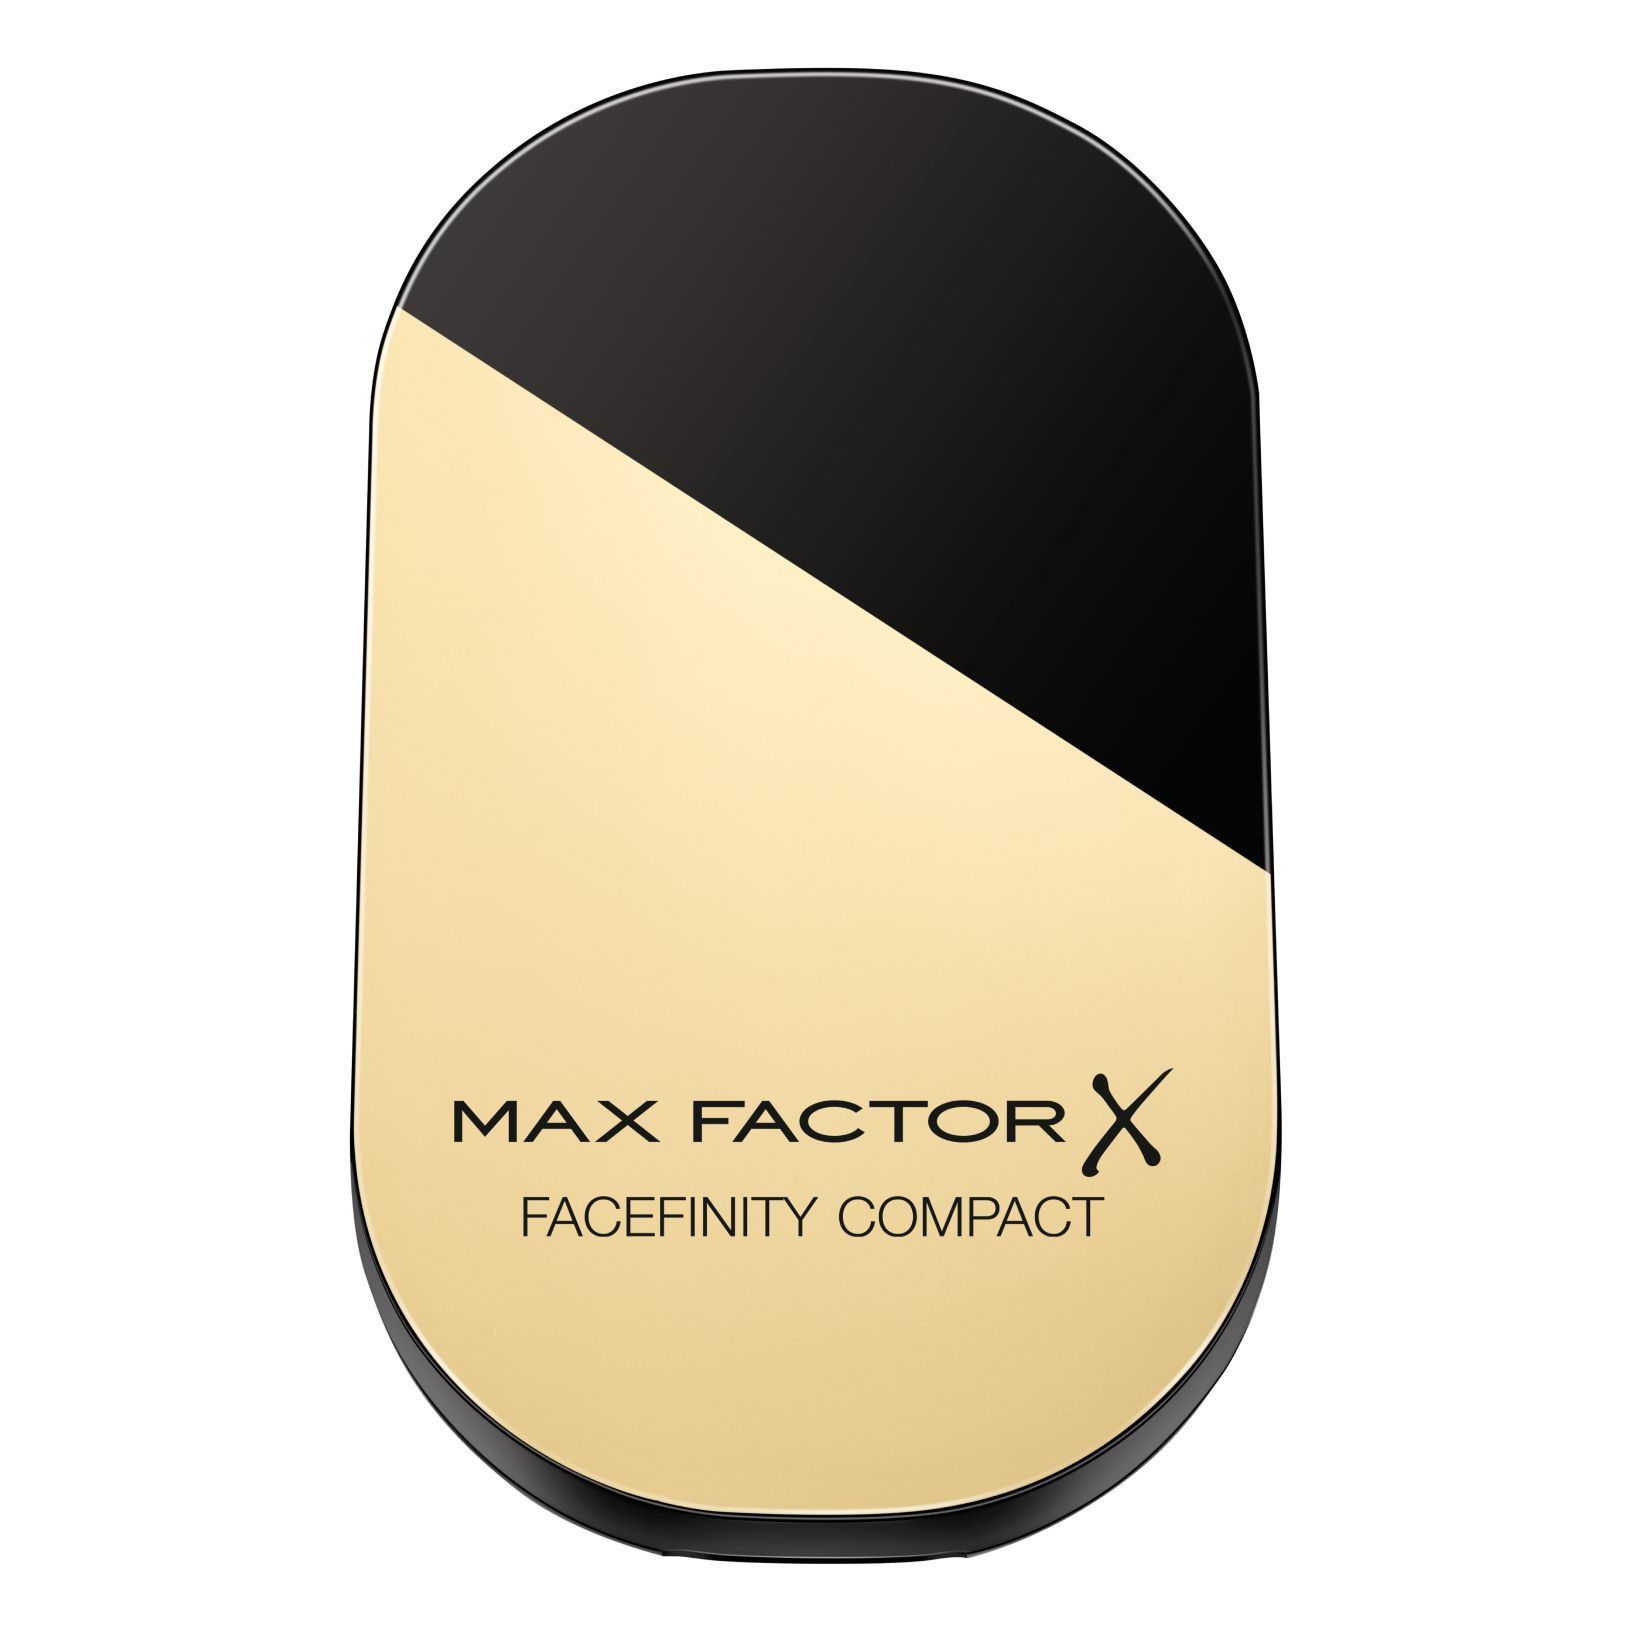 max factor head office